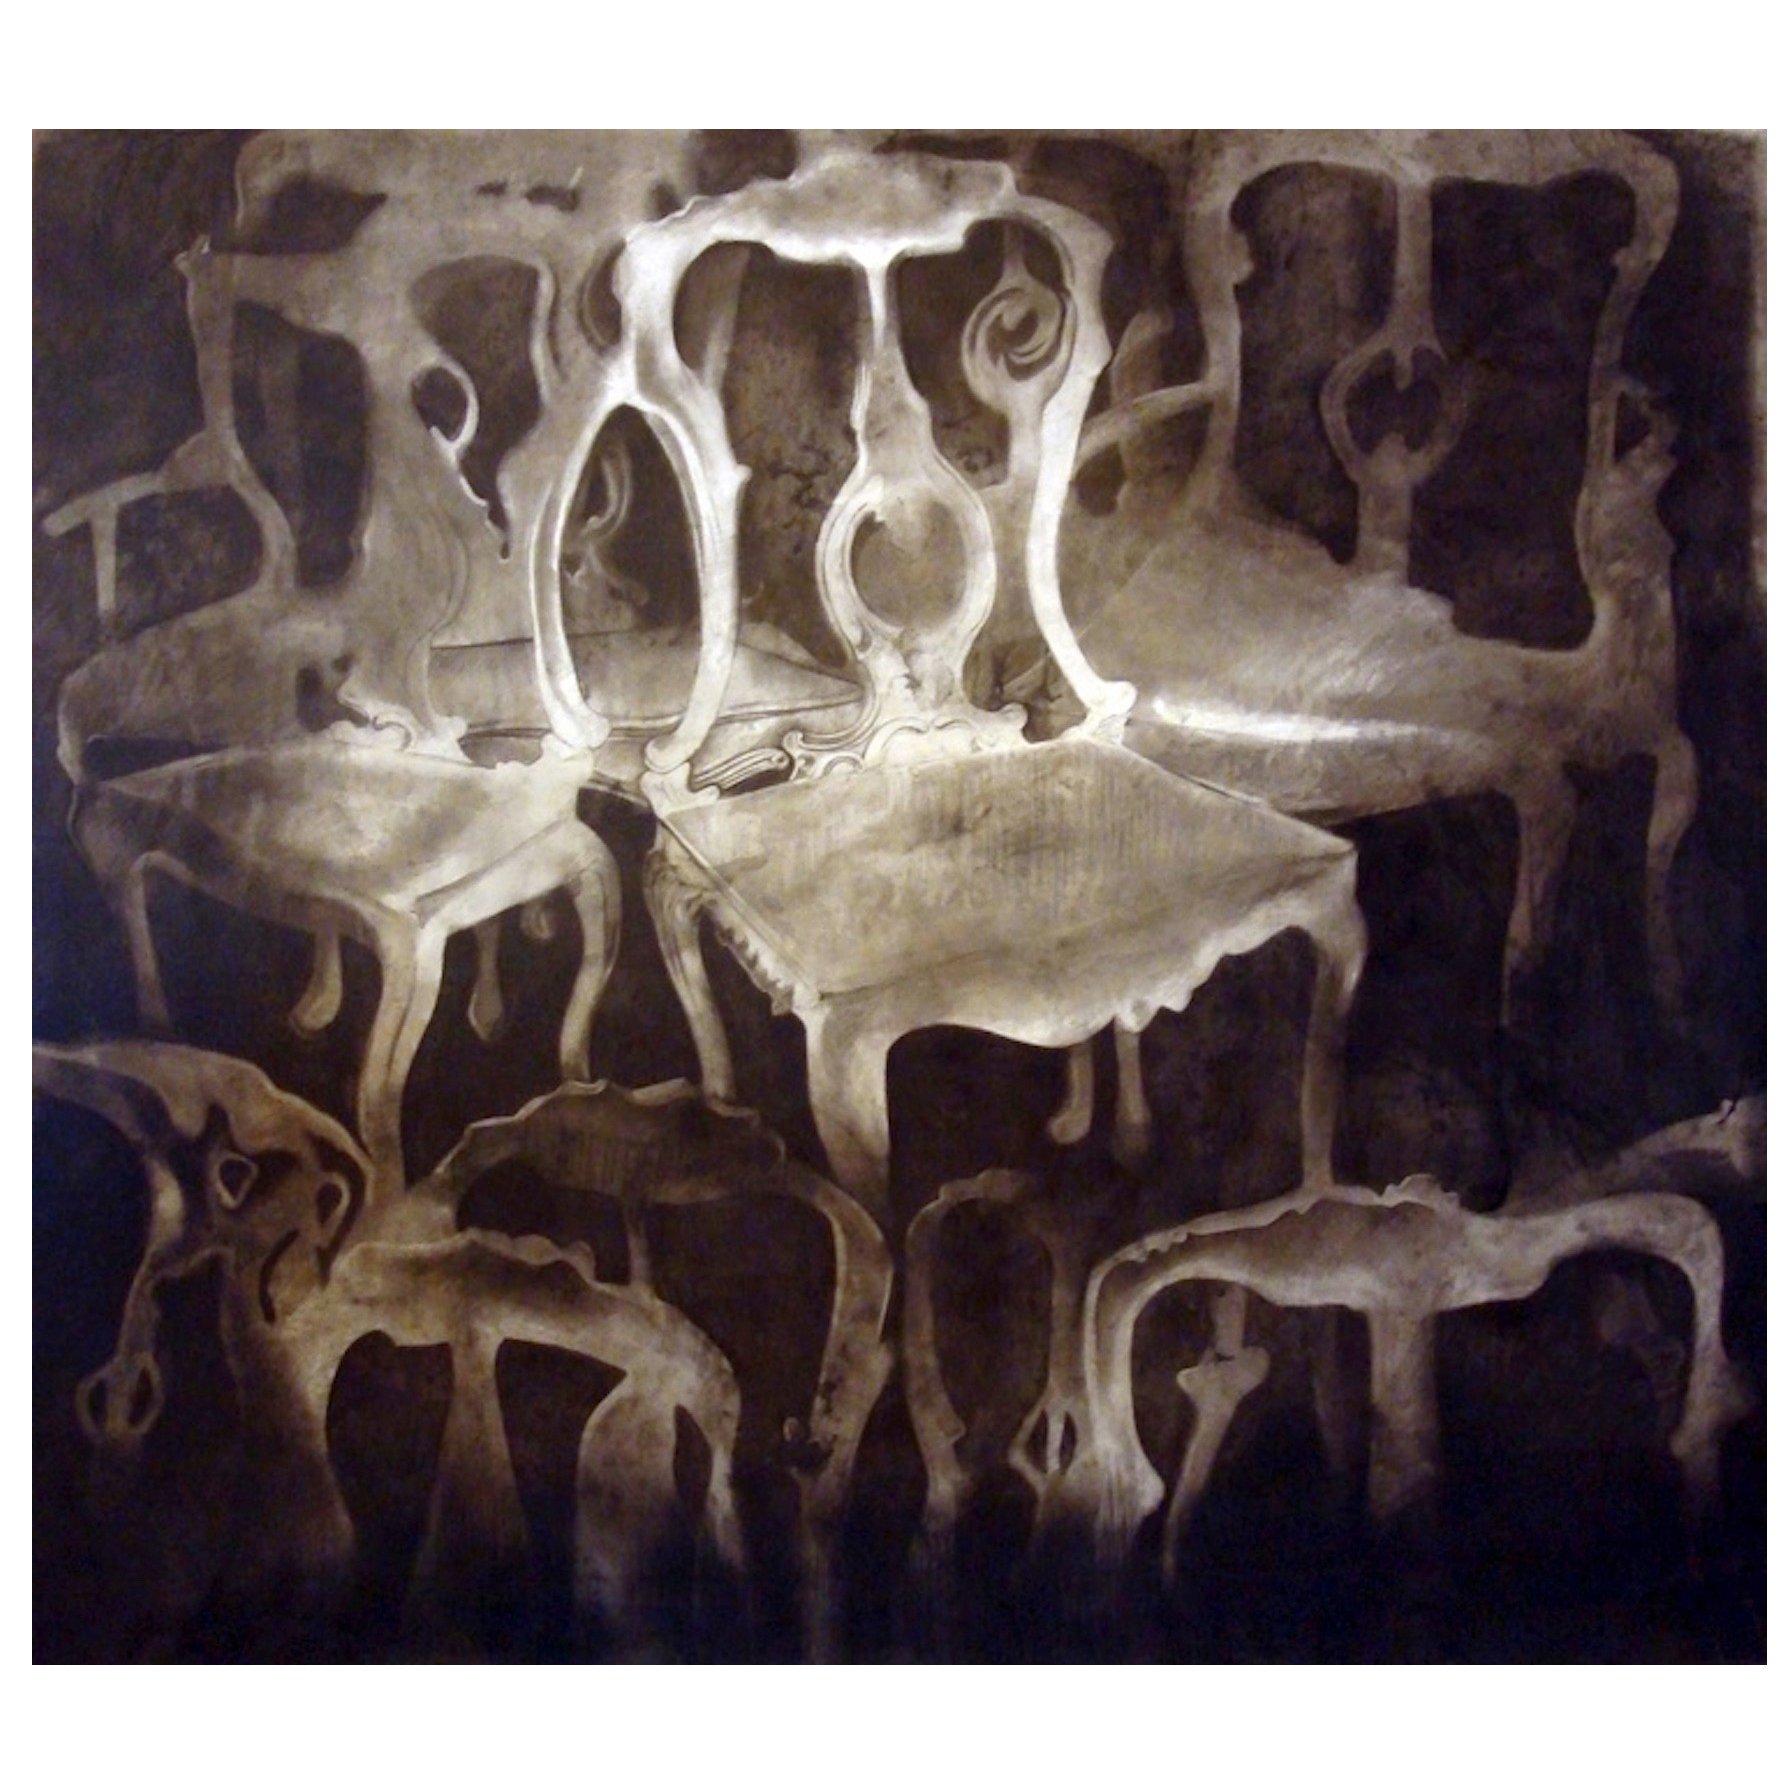 ""Accent", Peinture monumentale au fusain sur toile de Jessica Scott Felder